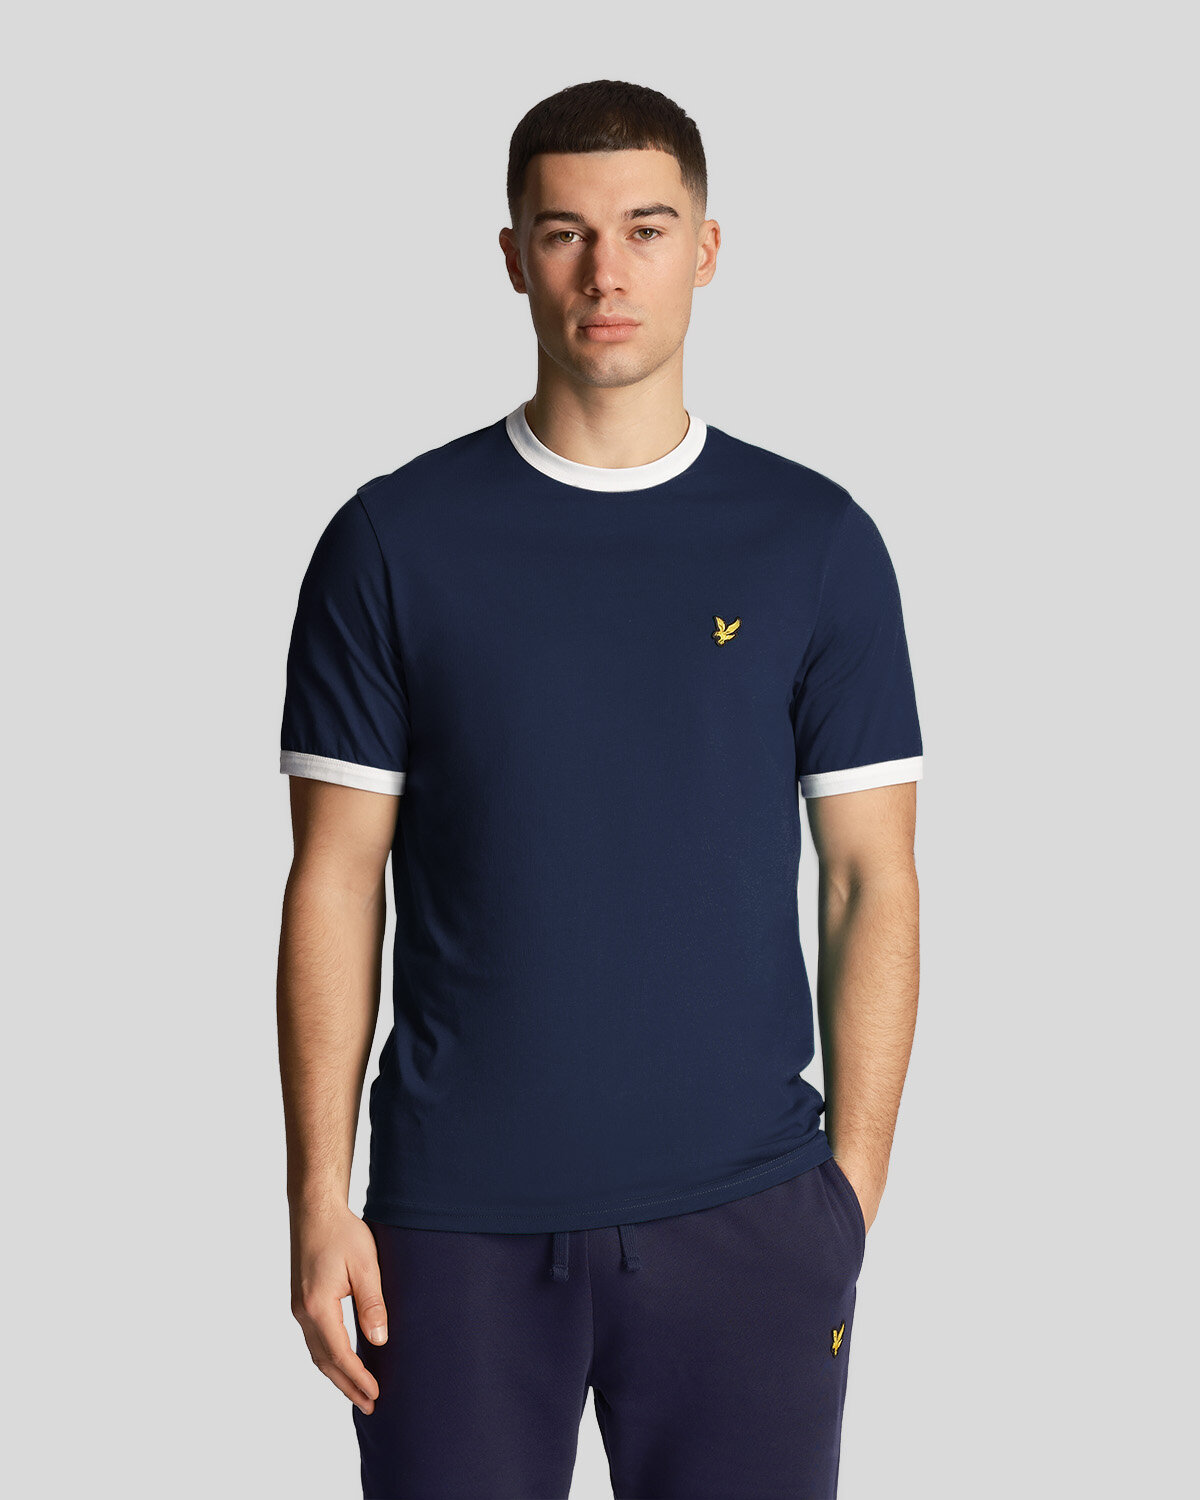 Футболка Lyle & Scott Ringer T-Shirt, размер L, желтый, синий